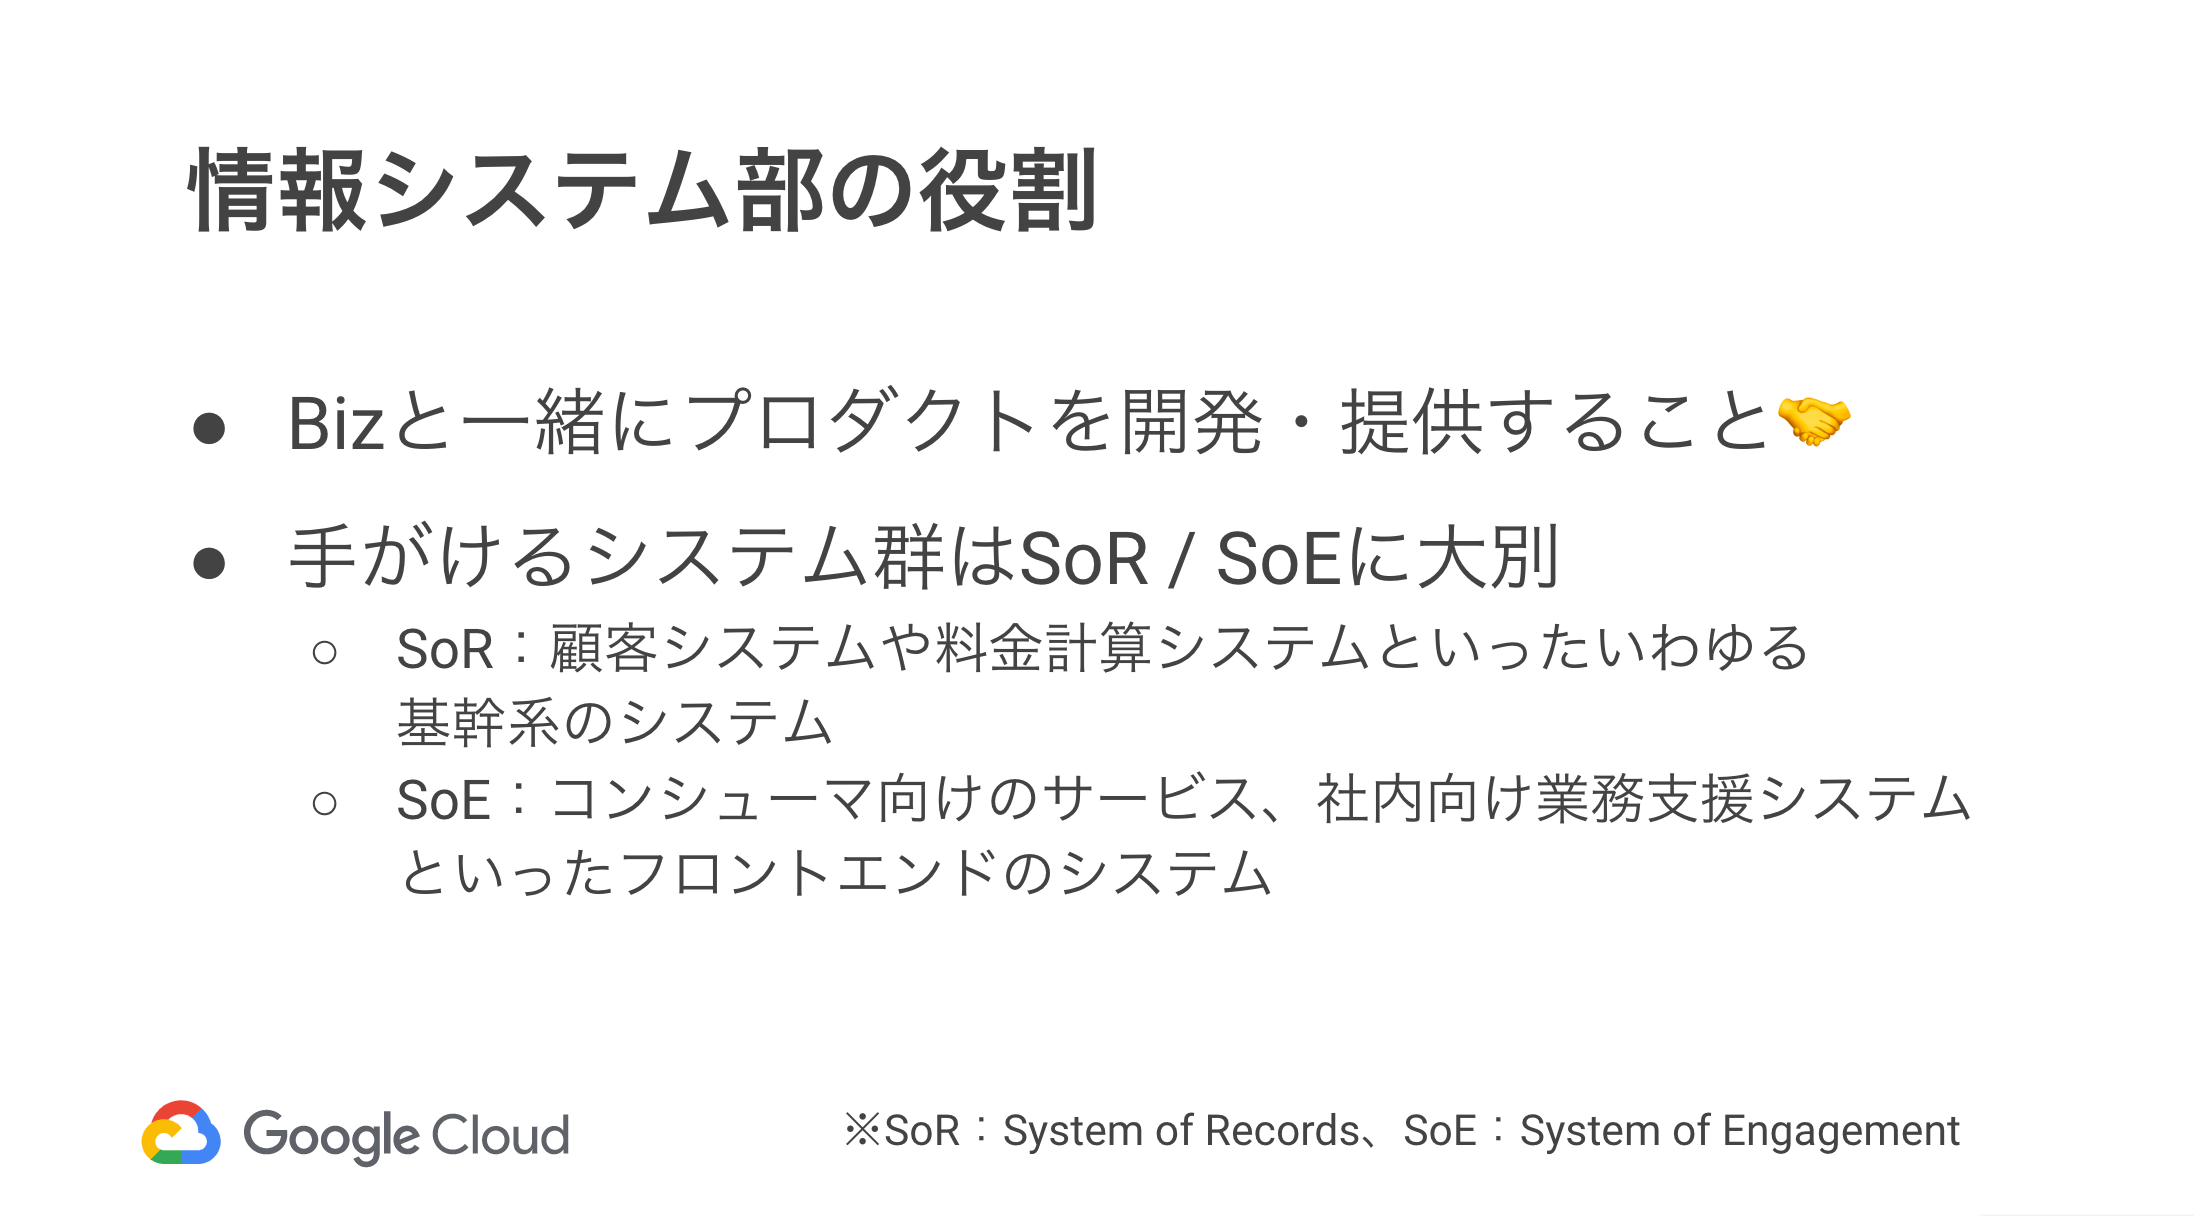 _Session_06__NTTドコモ情報システム部におけるGKE導入事例　～パーソナルデータダッシュボード開発～_-_Google_スライド.png